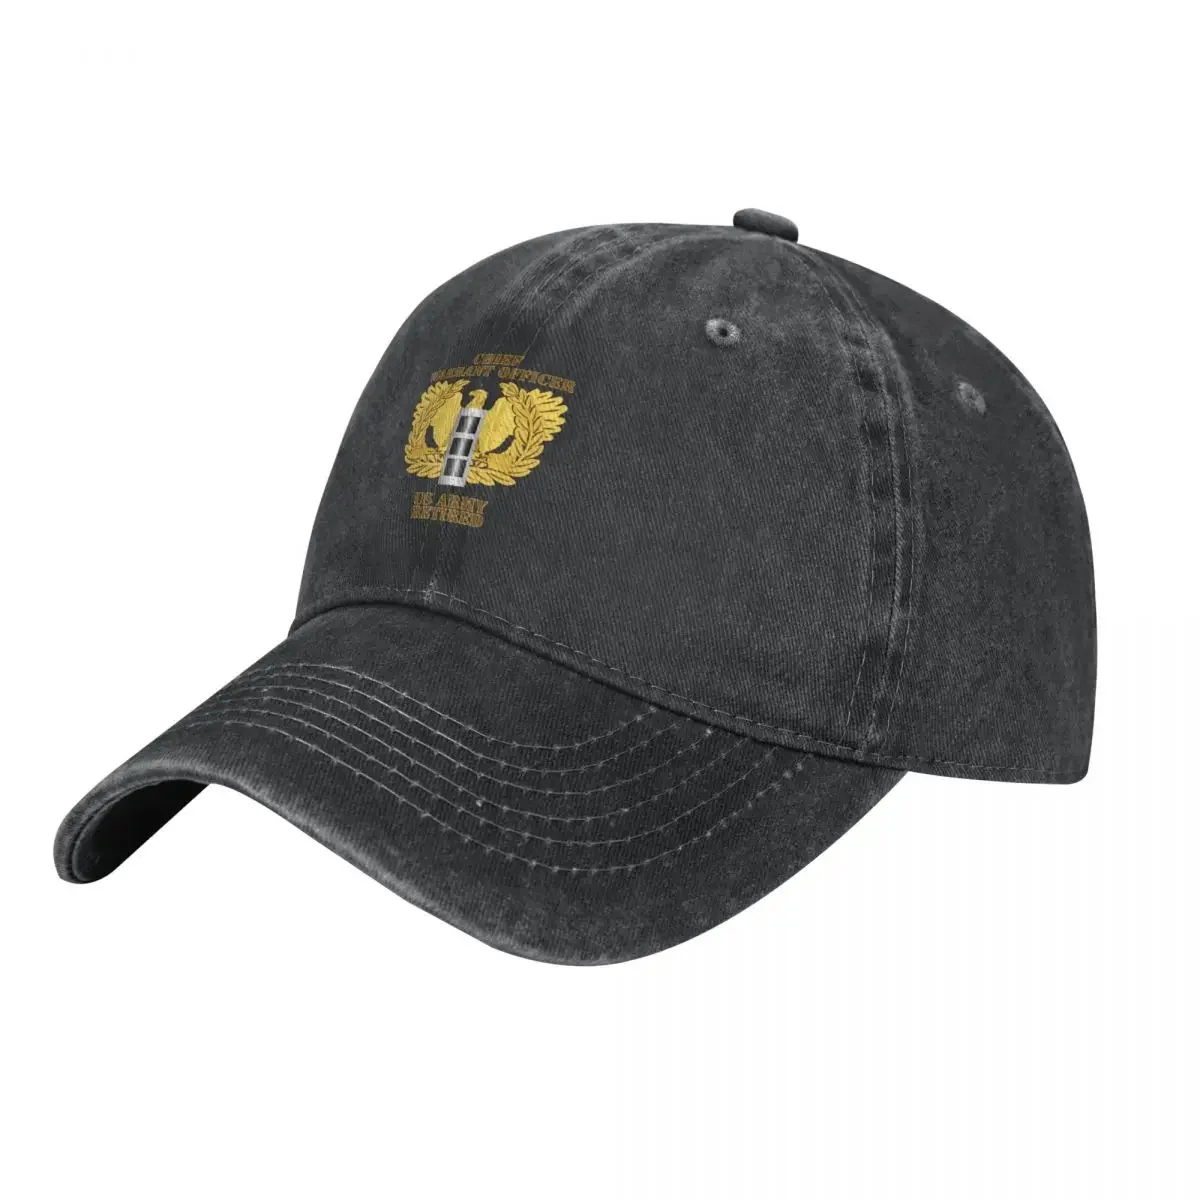 

Army - Emblem - Warrant Officer - CW3 Retired Cowboy Hat Kids Hat Luxury Cap Visor Golf Wear Caps For Men Women's